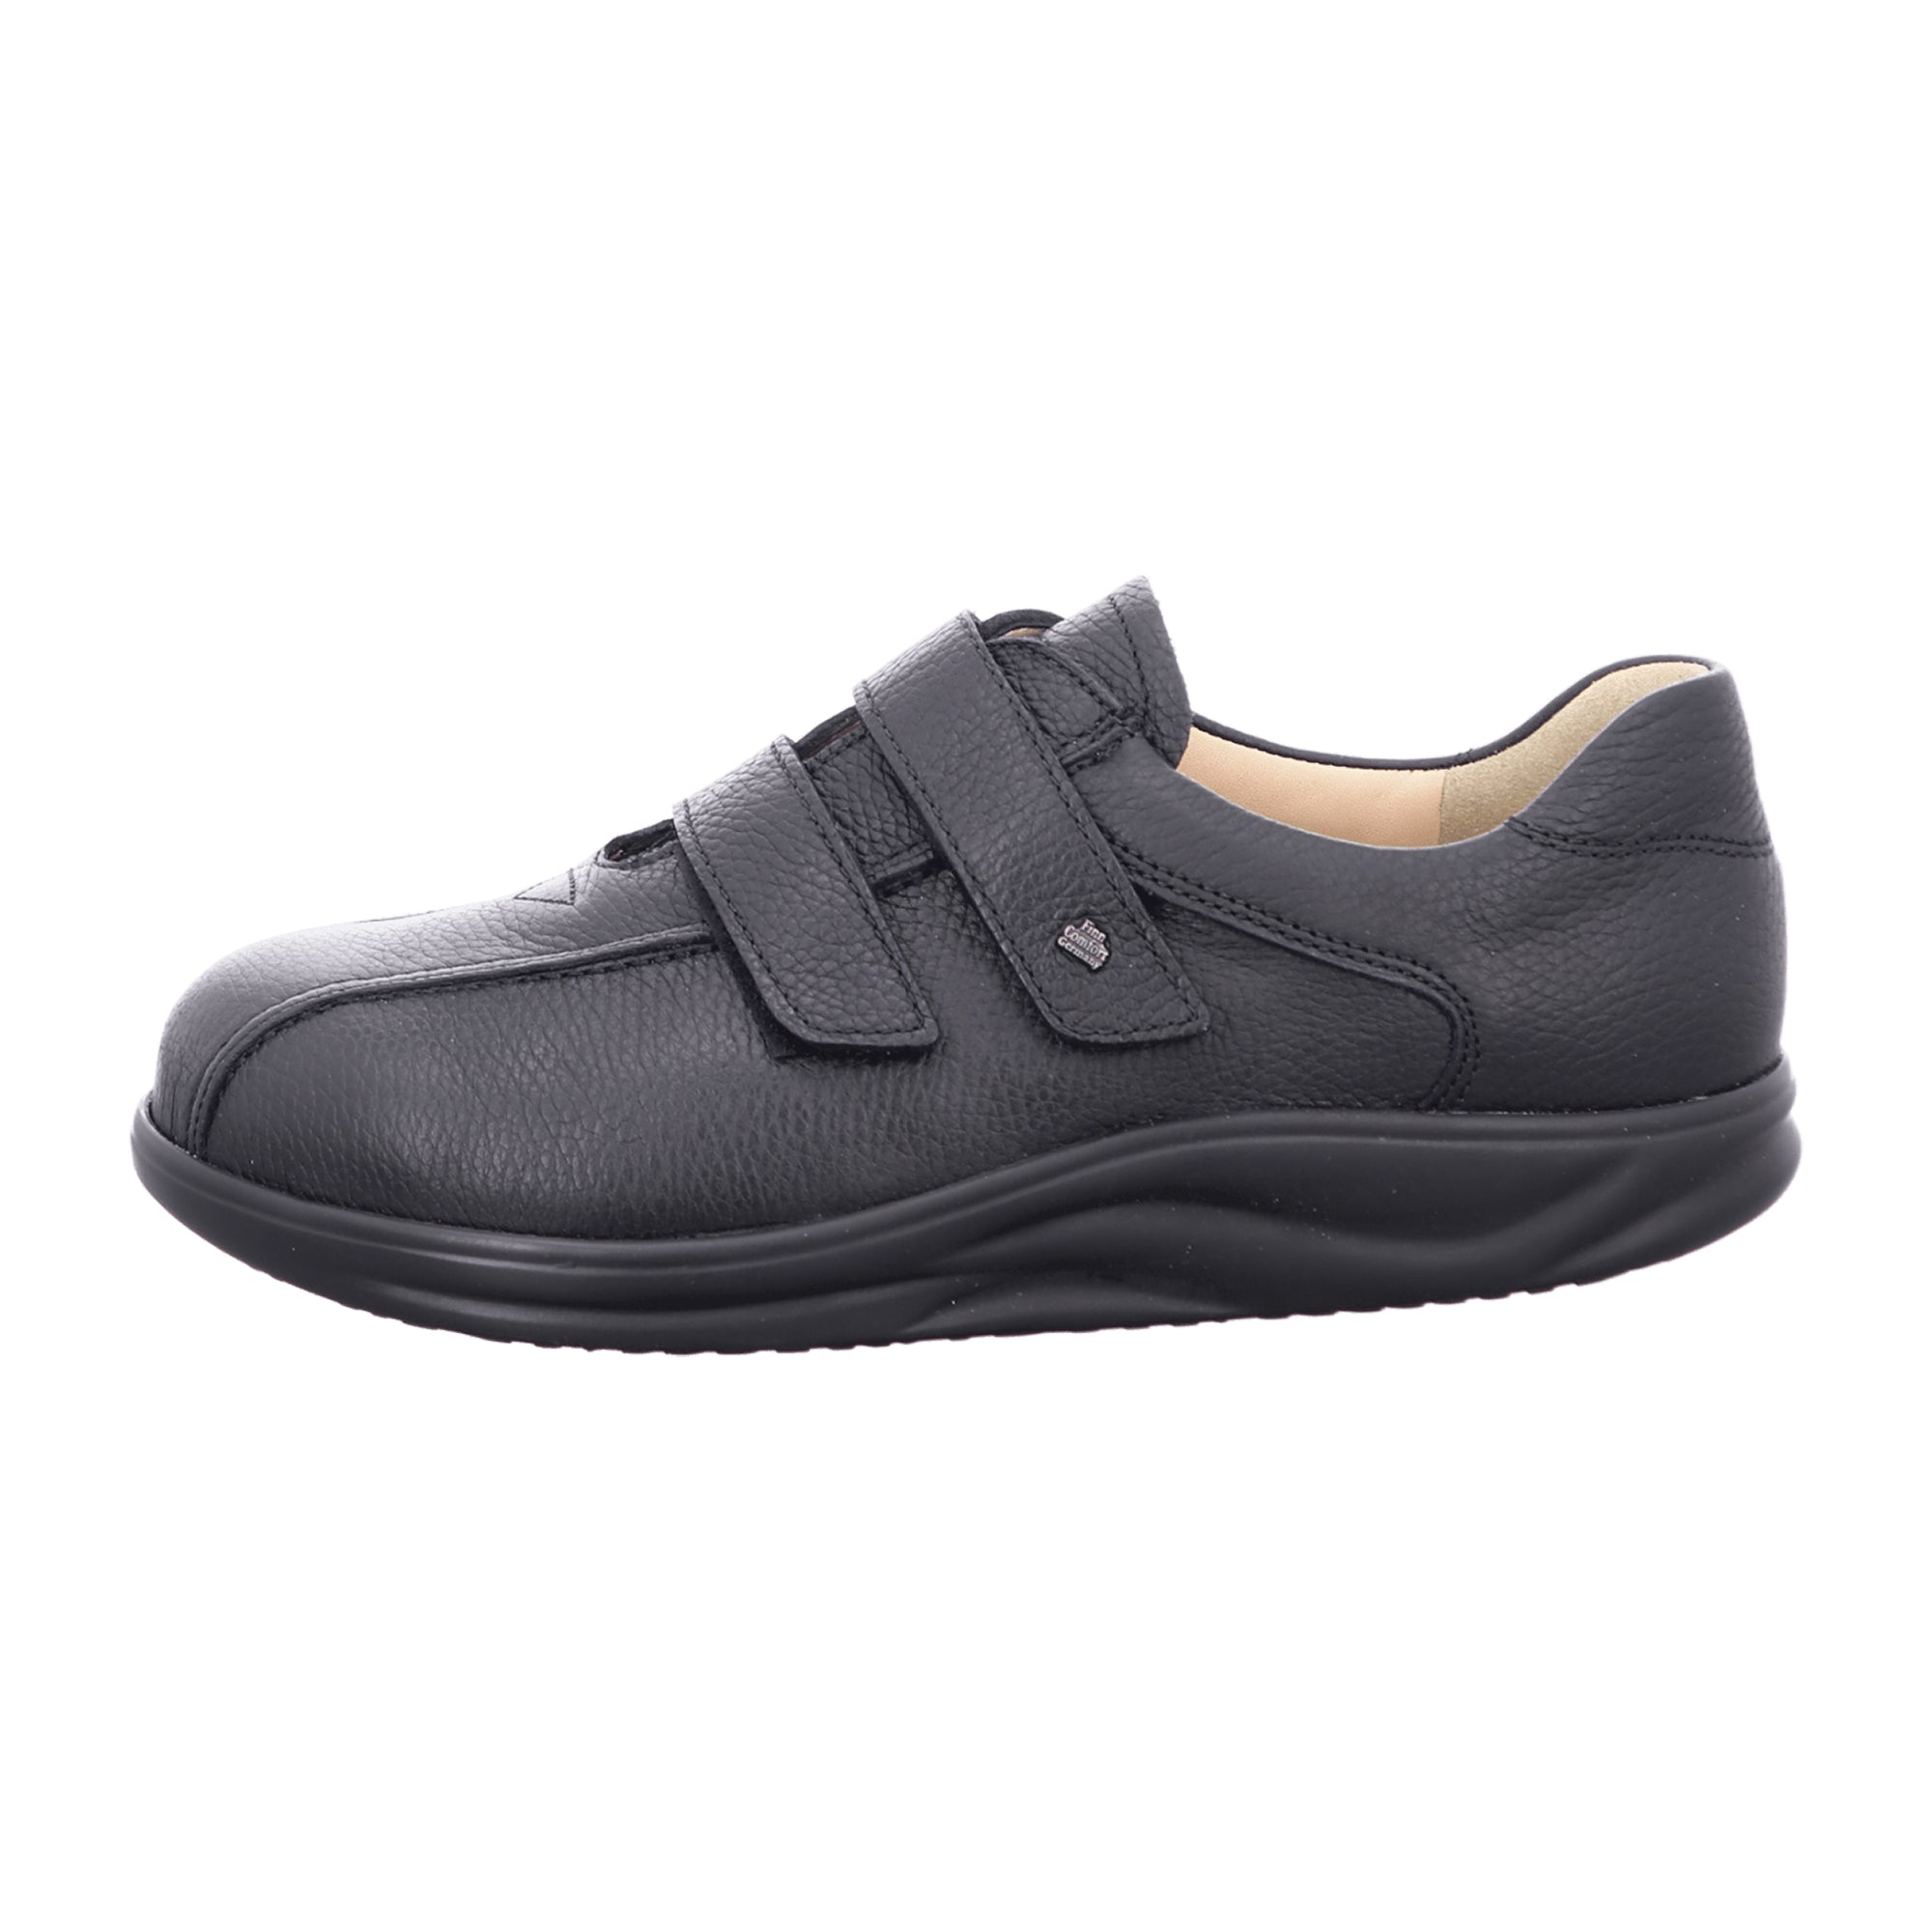 Finn Comfort Cambridge Men's Orthopedic Dress Shoes - Elegant Black Leather